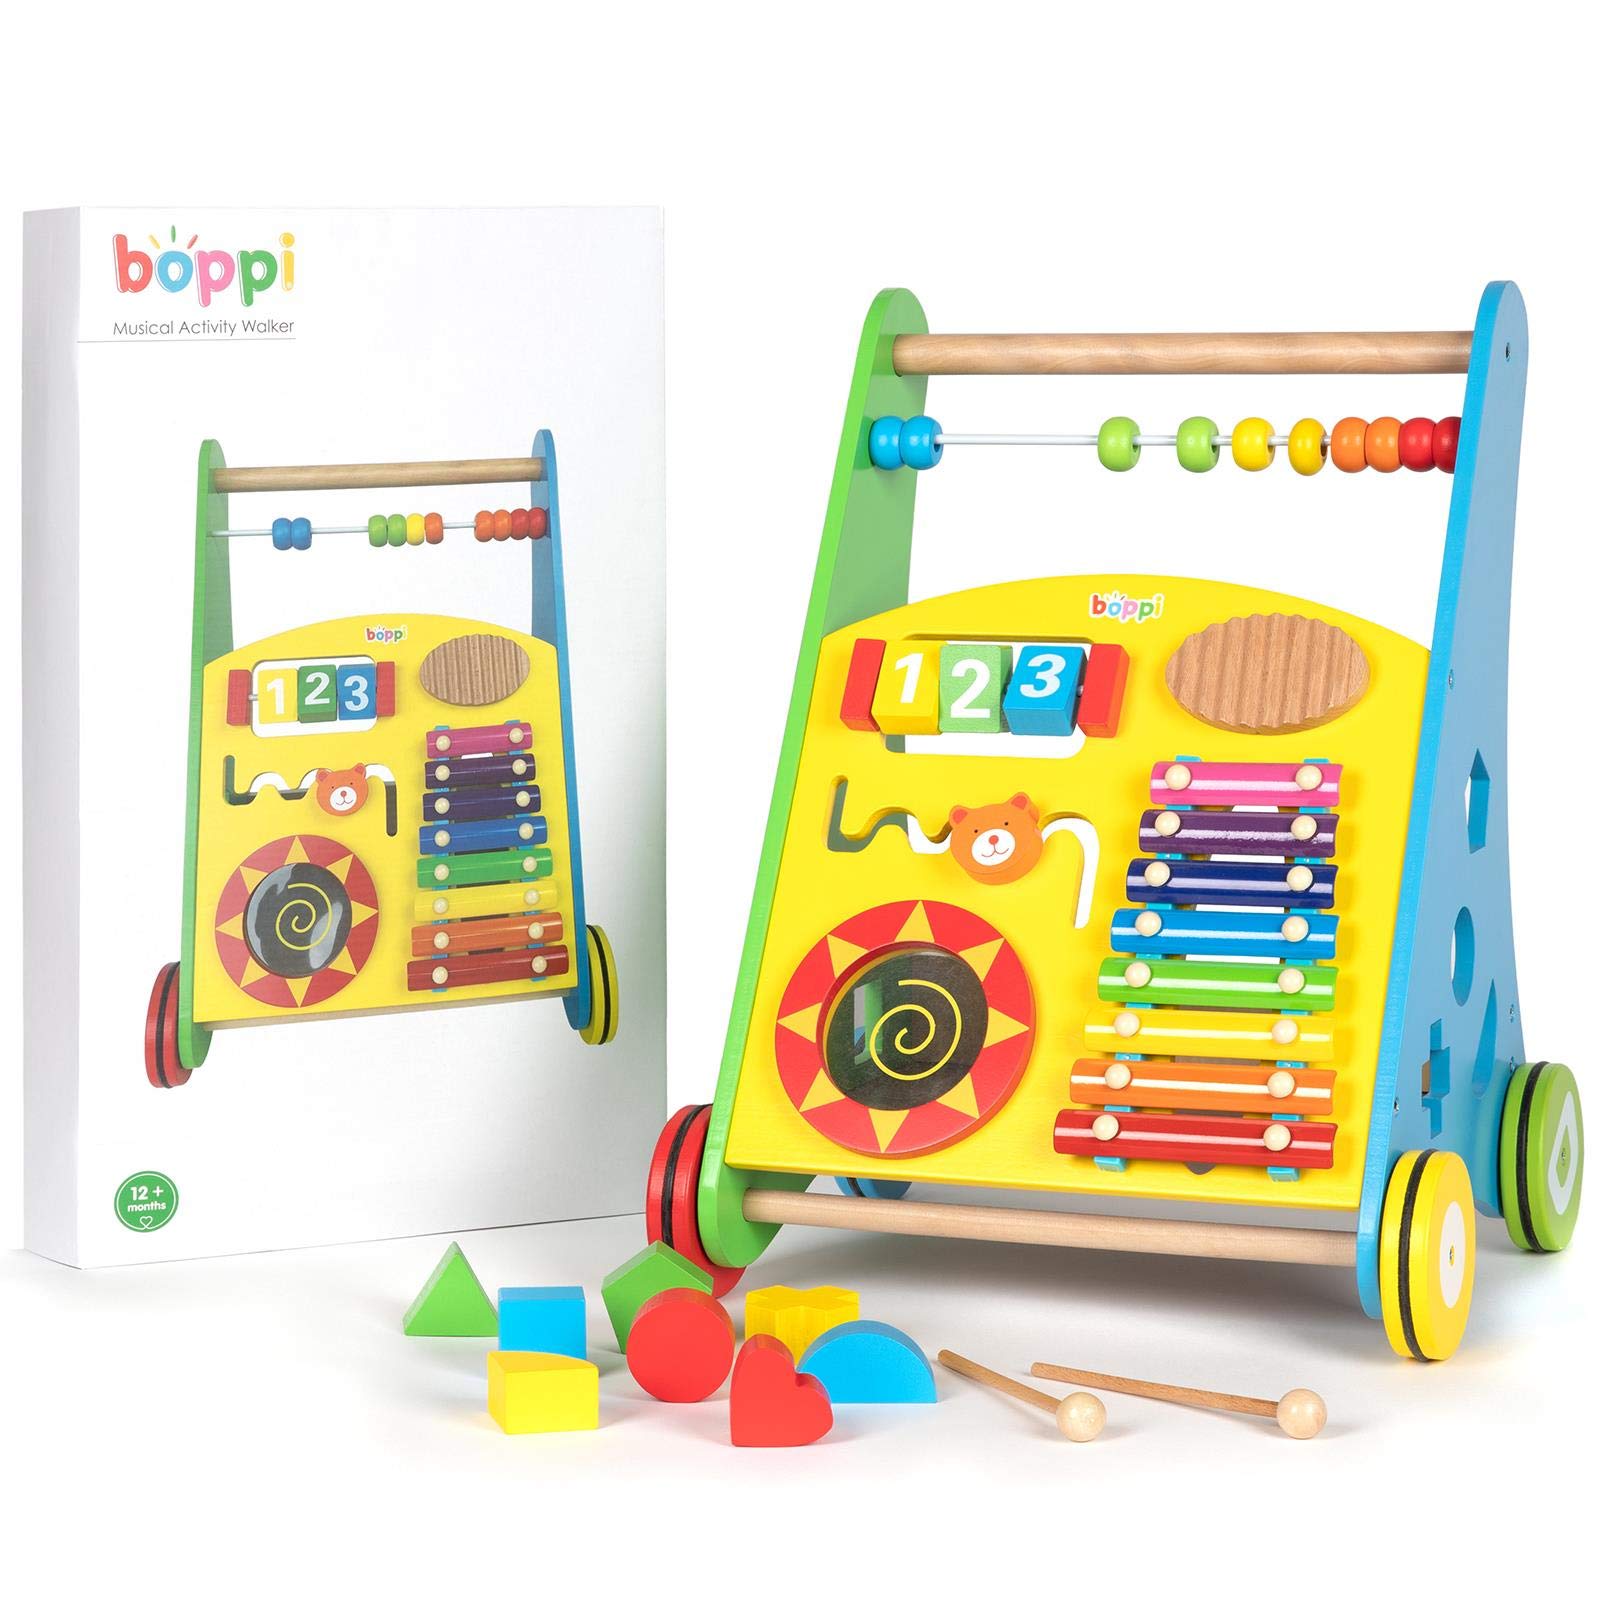 boppi Wooden Baby Push-Along Walker | Toddler Walking Aid with Shape Sorter & Activity Centre for Toddler Girls & Boys 12 Months+ | Musical